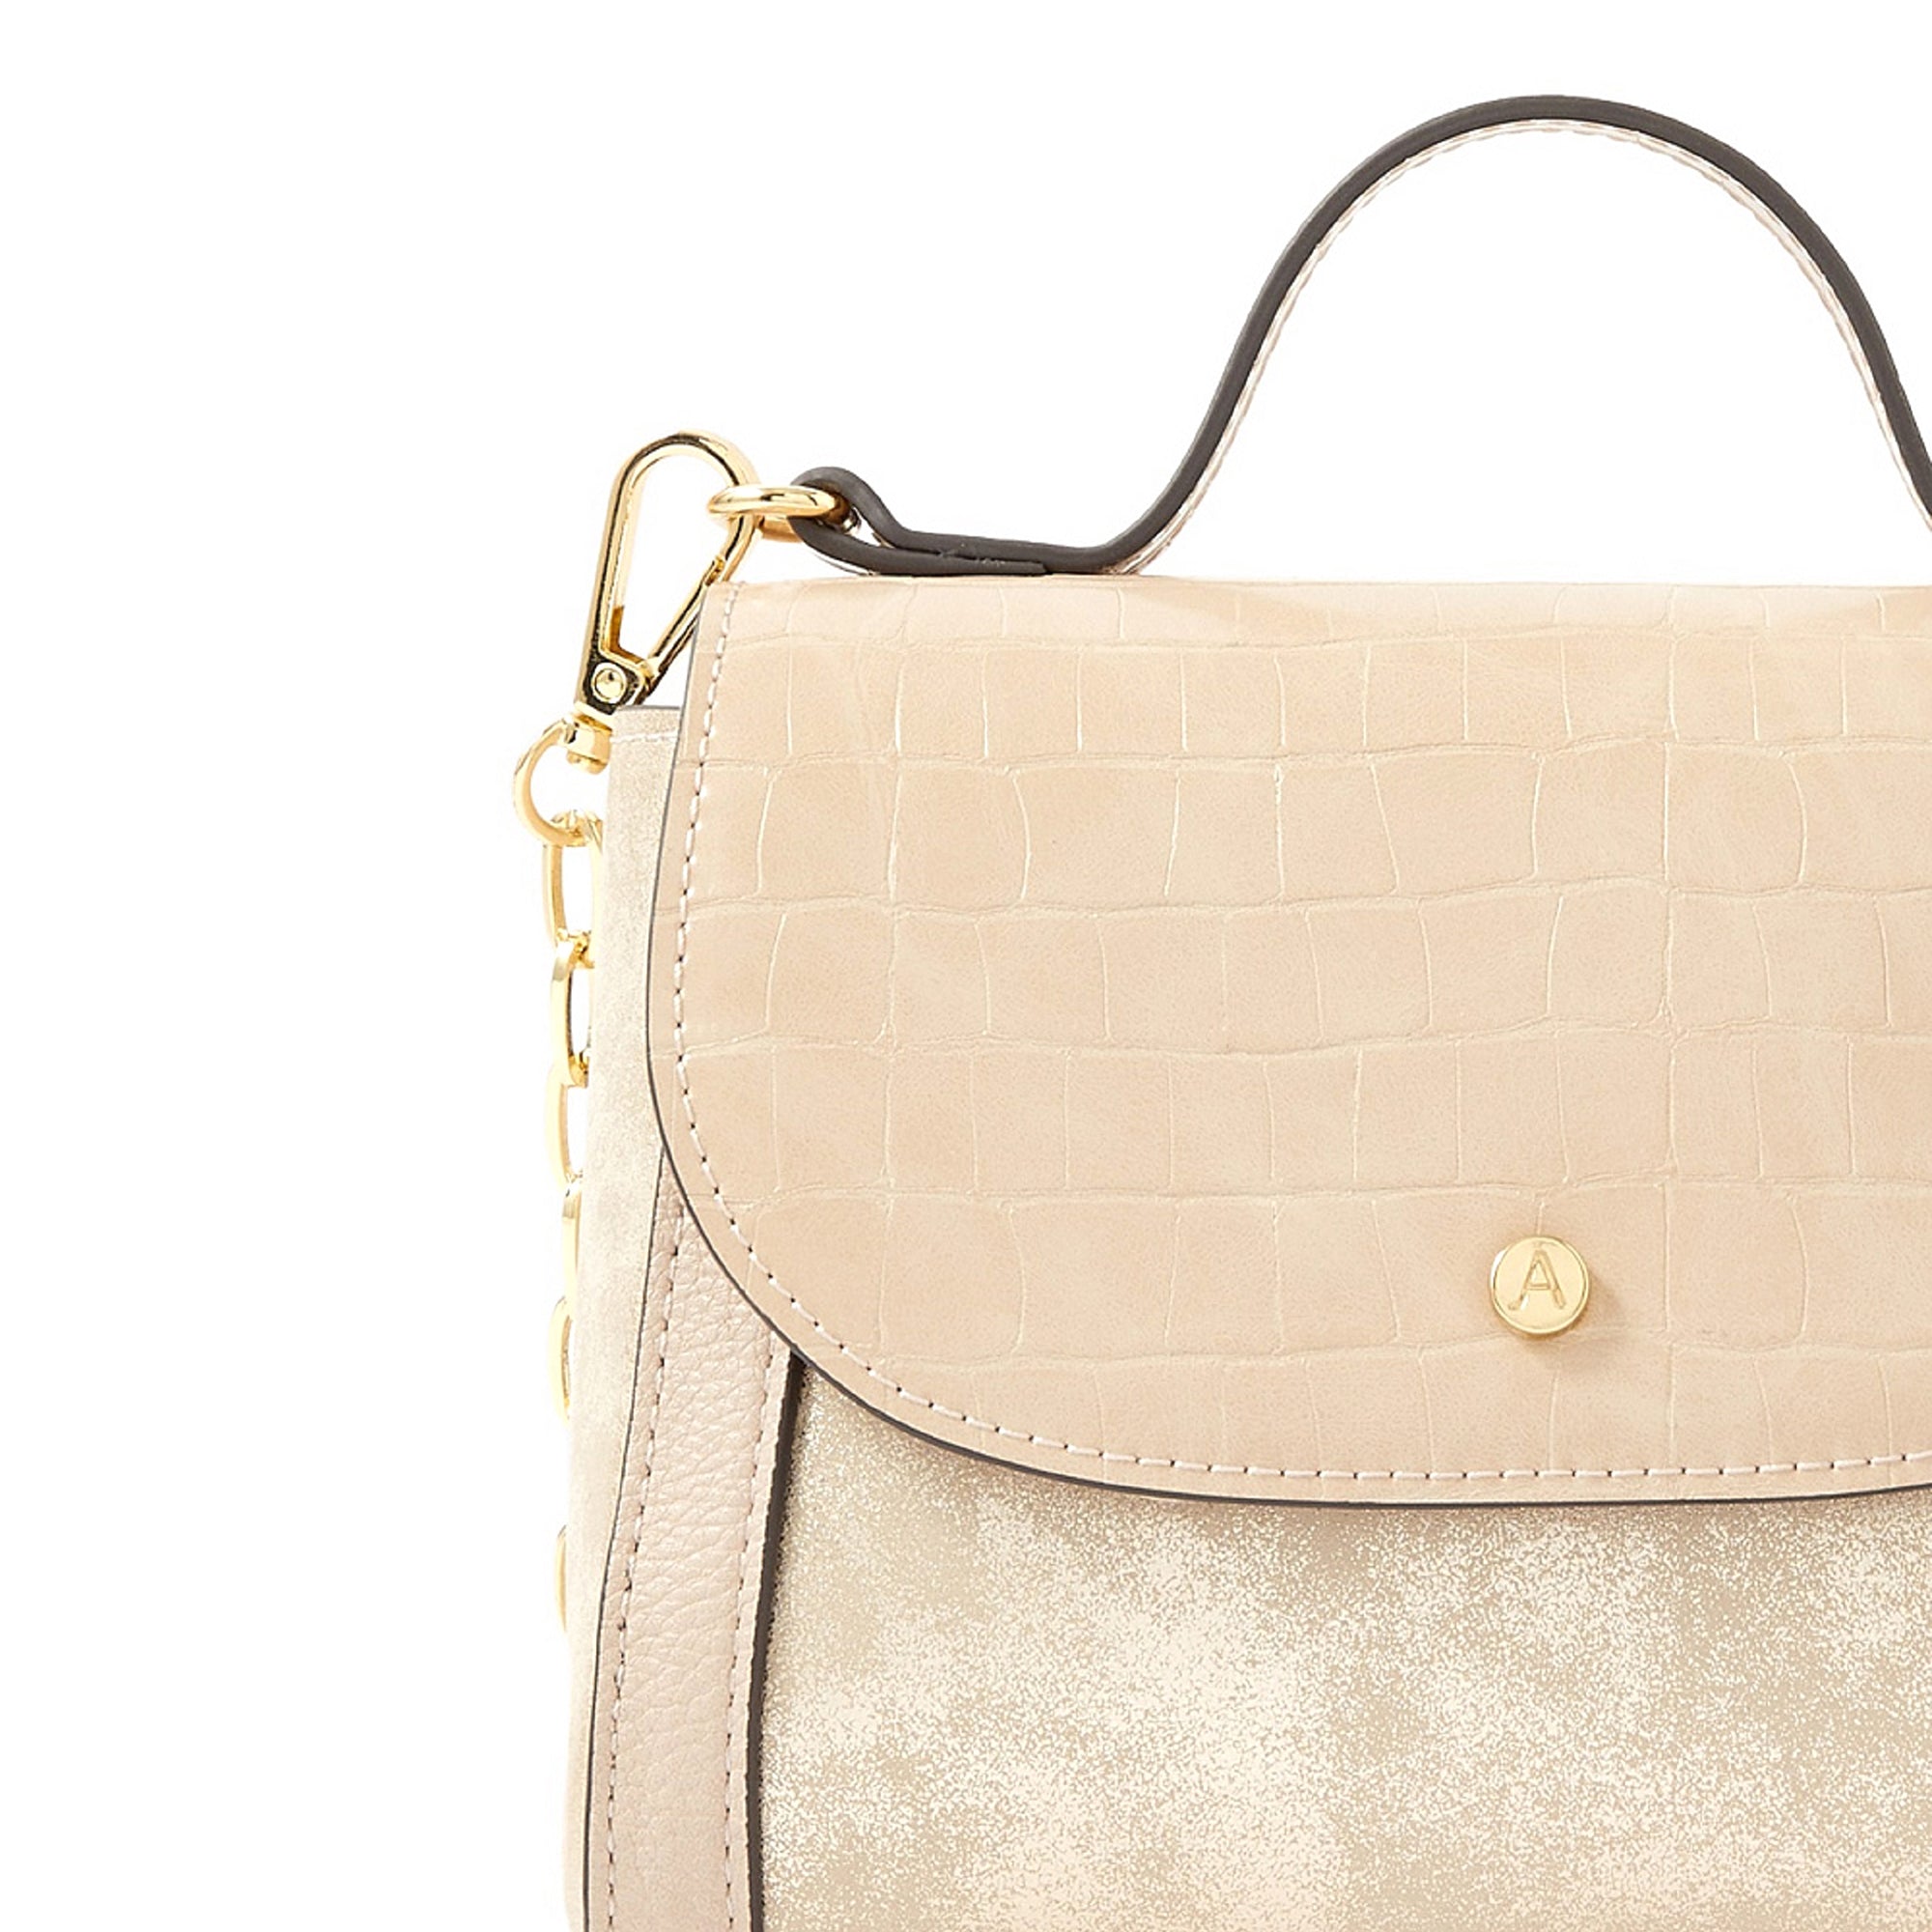 Accessorize London women's Faux Leather Pink Eleanor Tophandle Satchel Sling bag